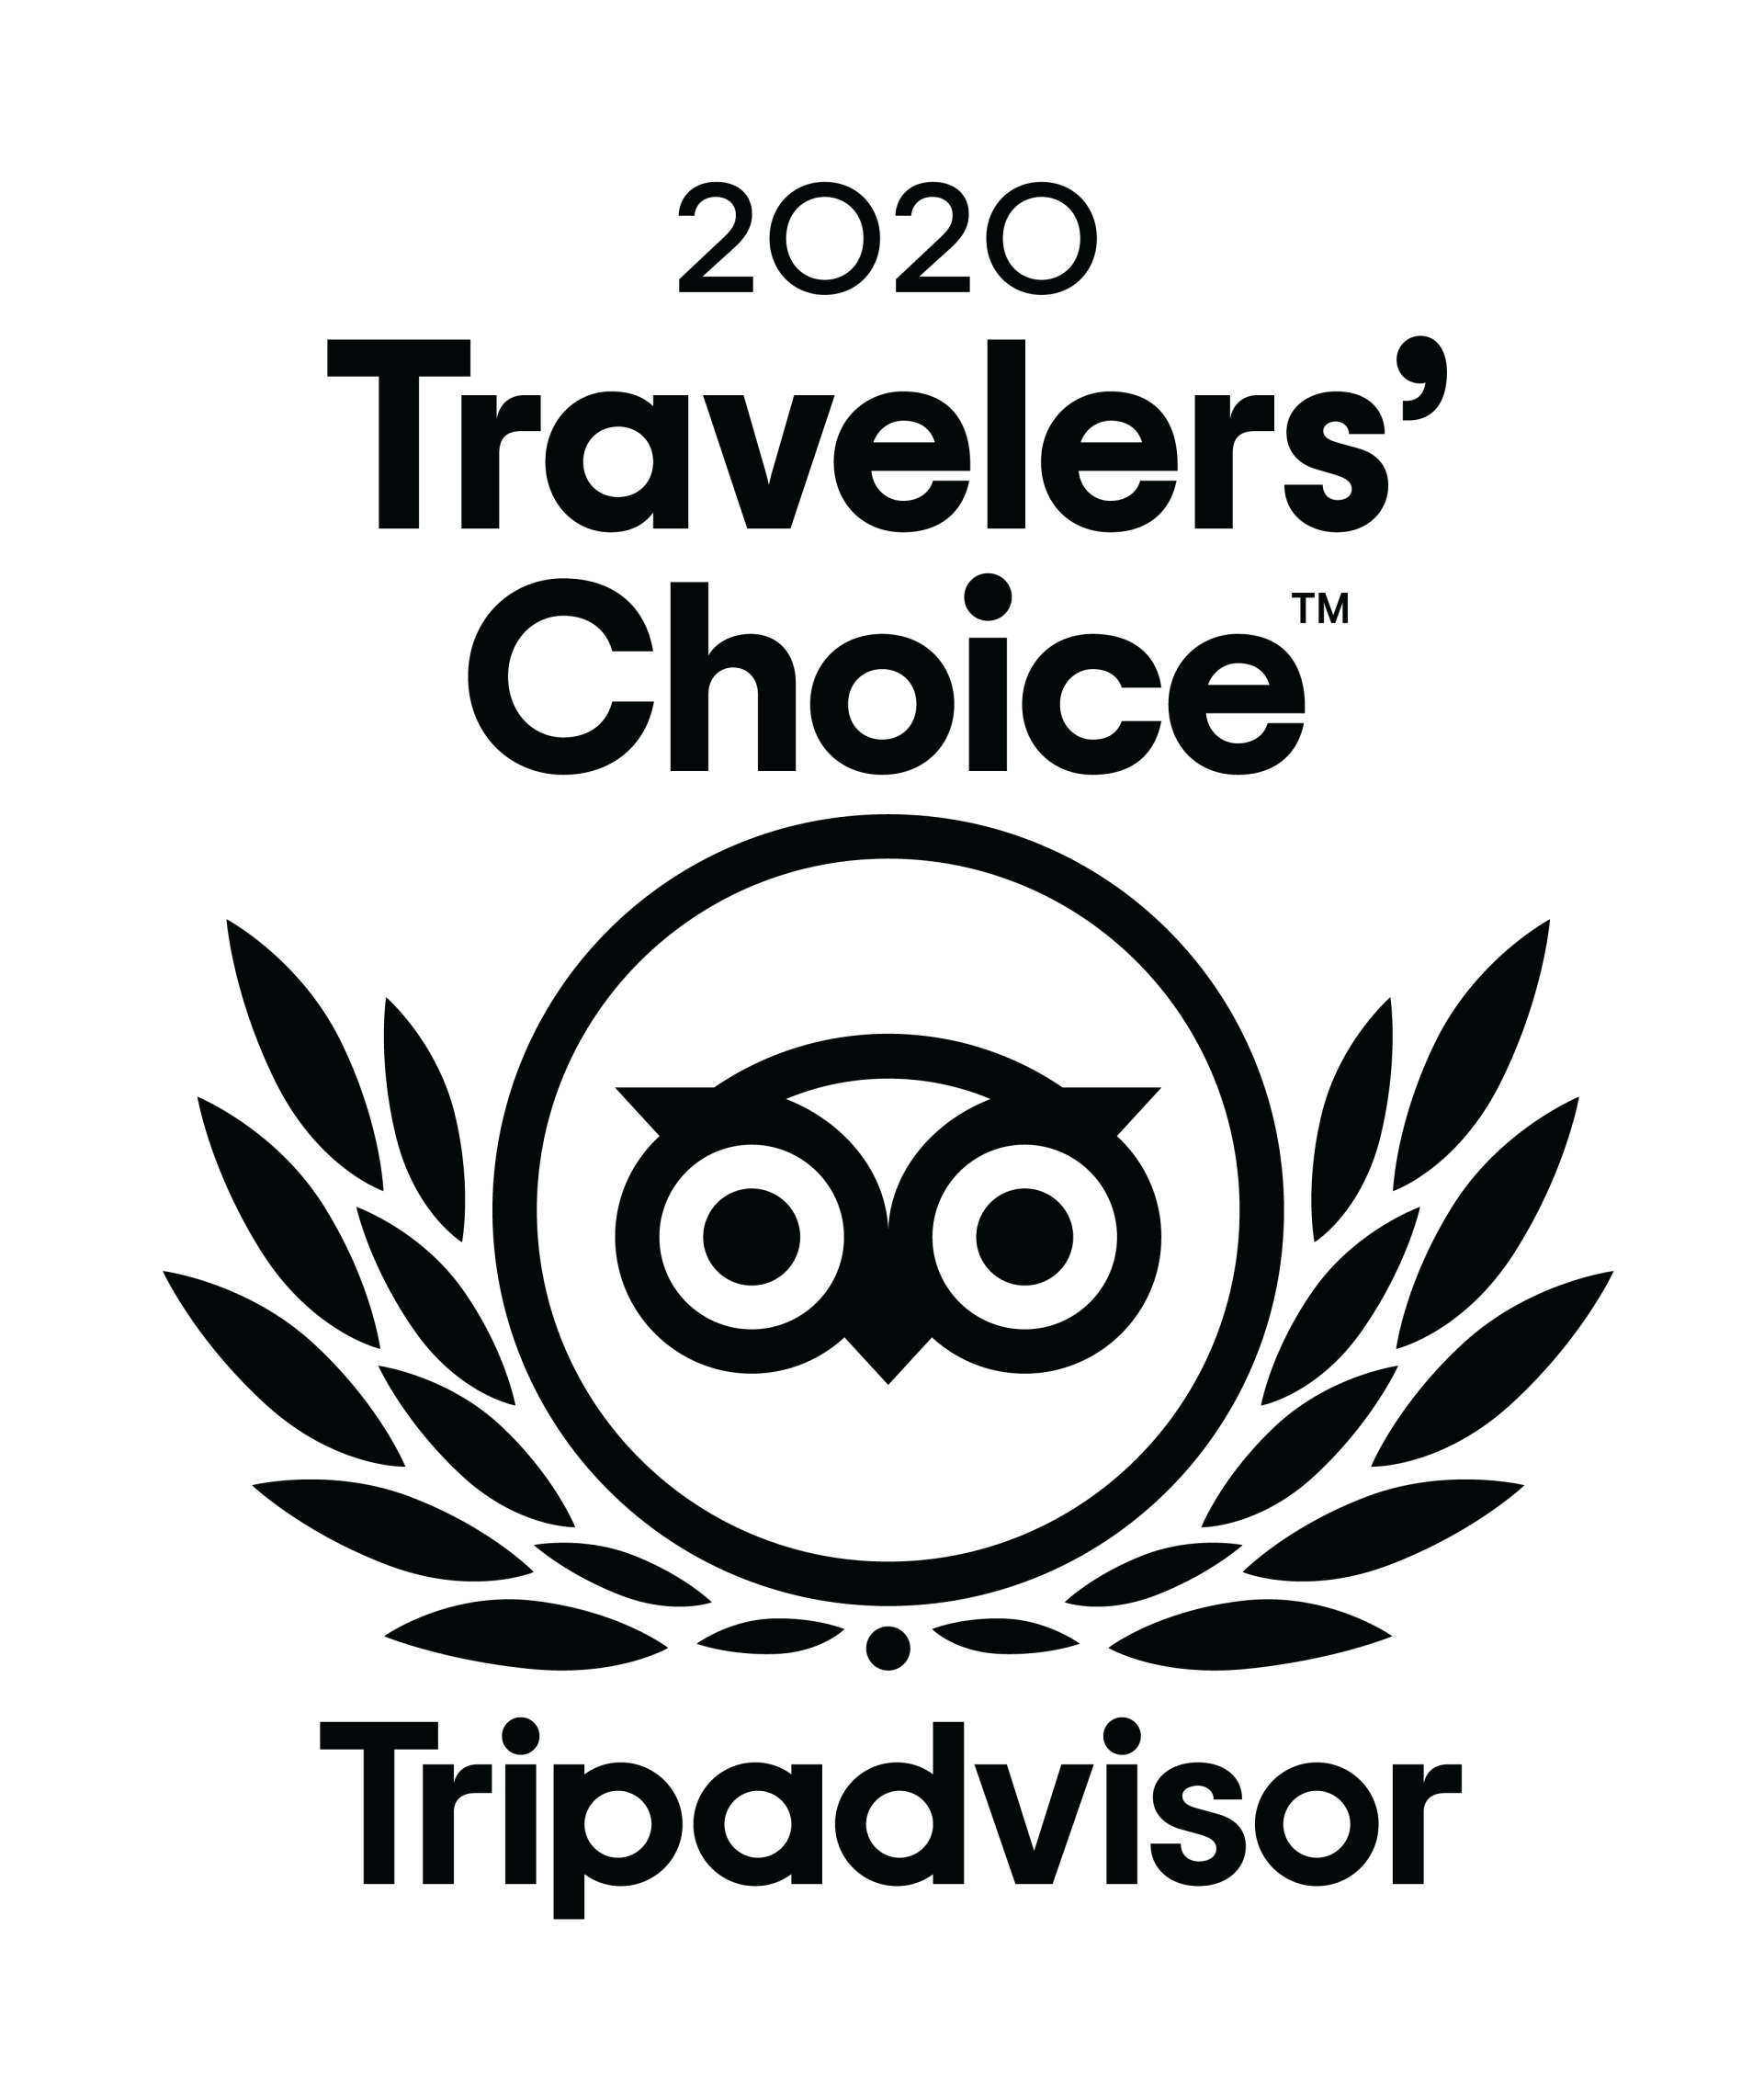 Aforia Termal Otel, Traveler's Choice 2020